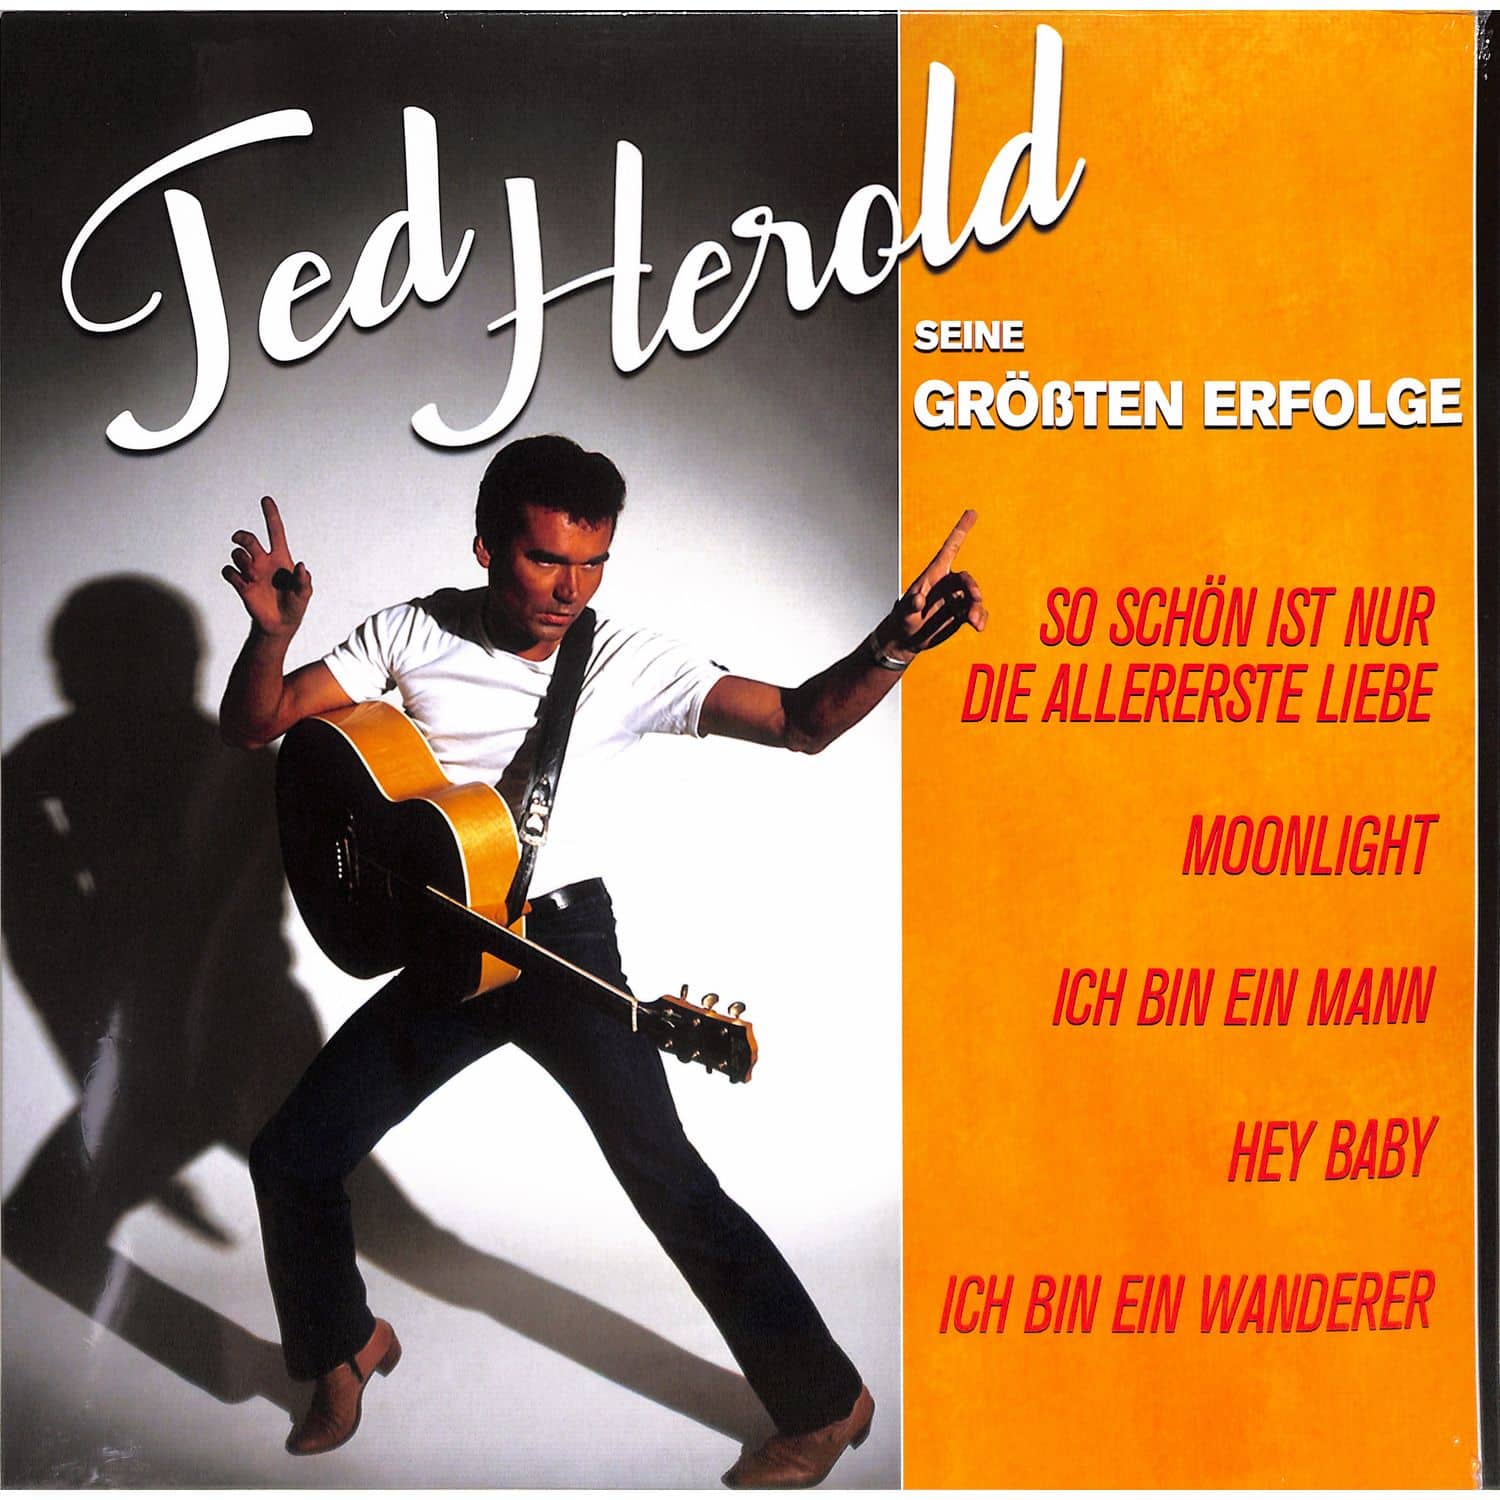 Ted Herold - SEINE GRSSTEN ERFOLGE 